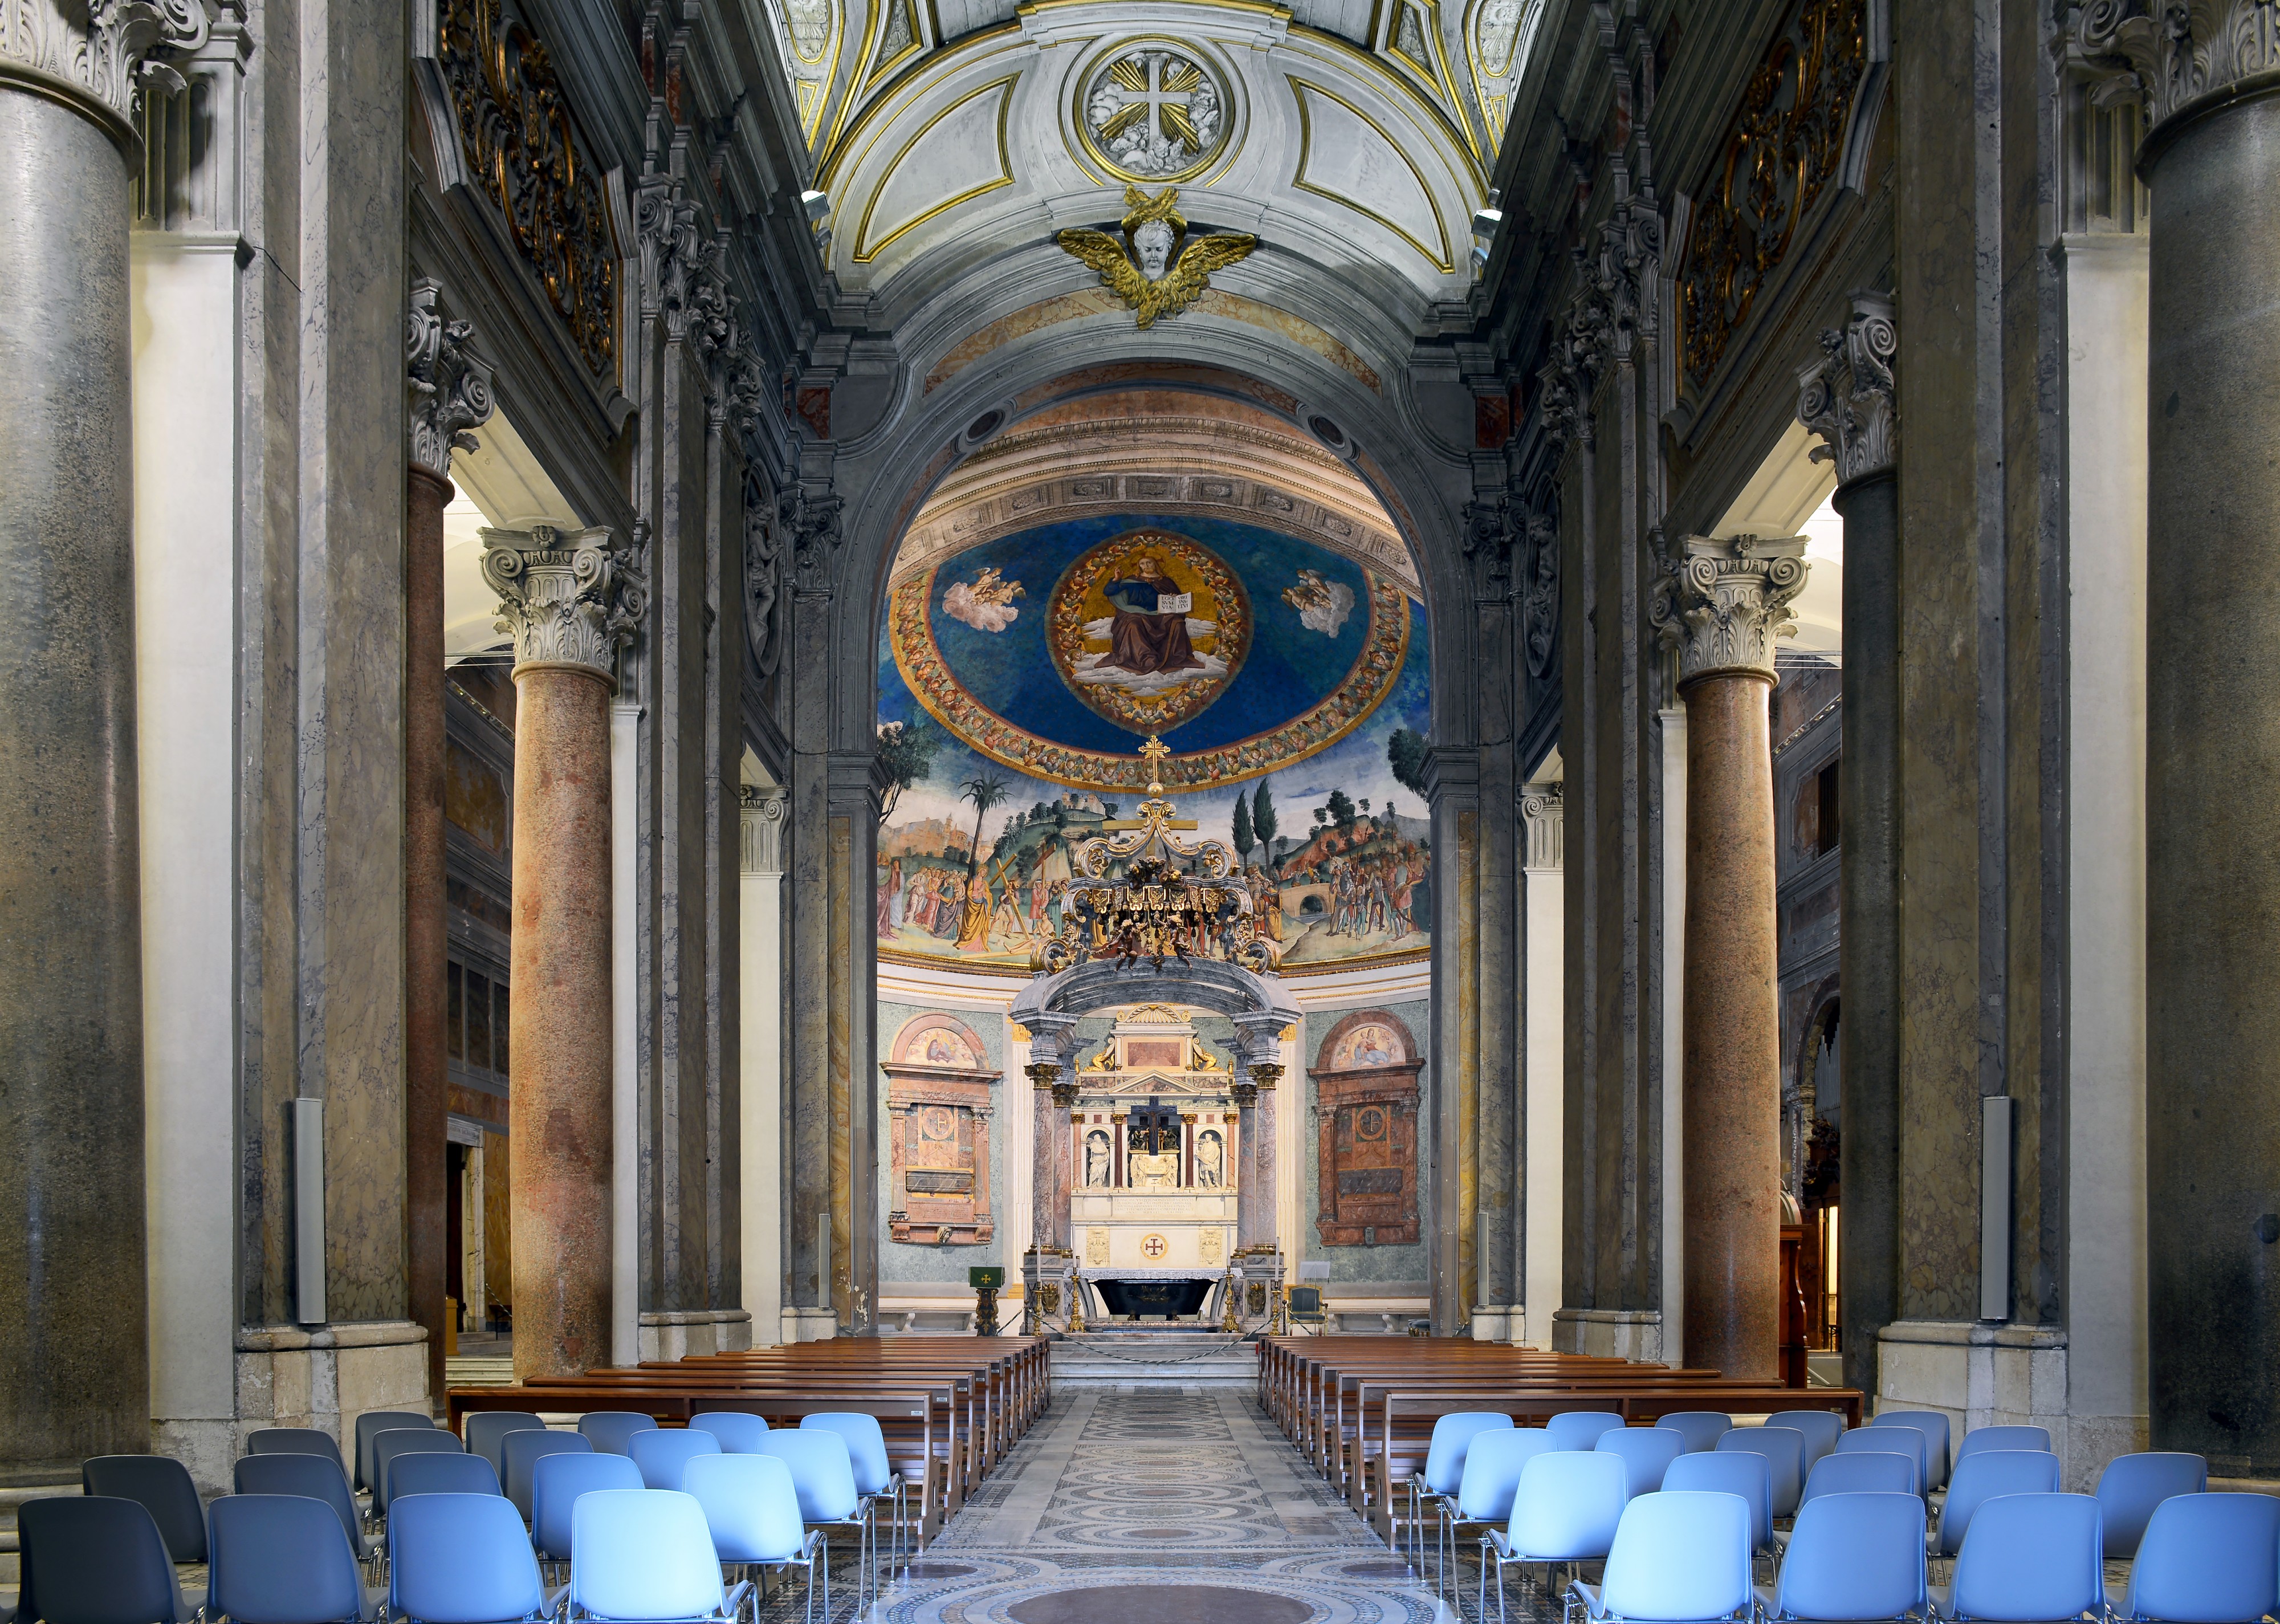 Santa Croce in Gerusalemme (Rome) - interior